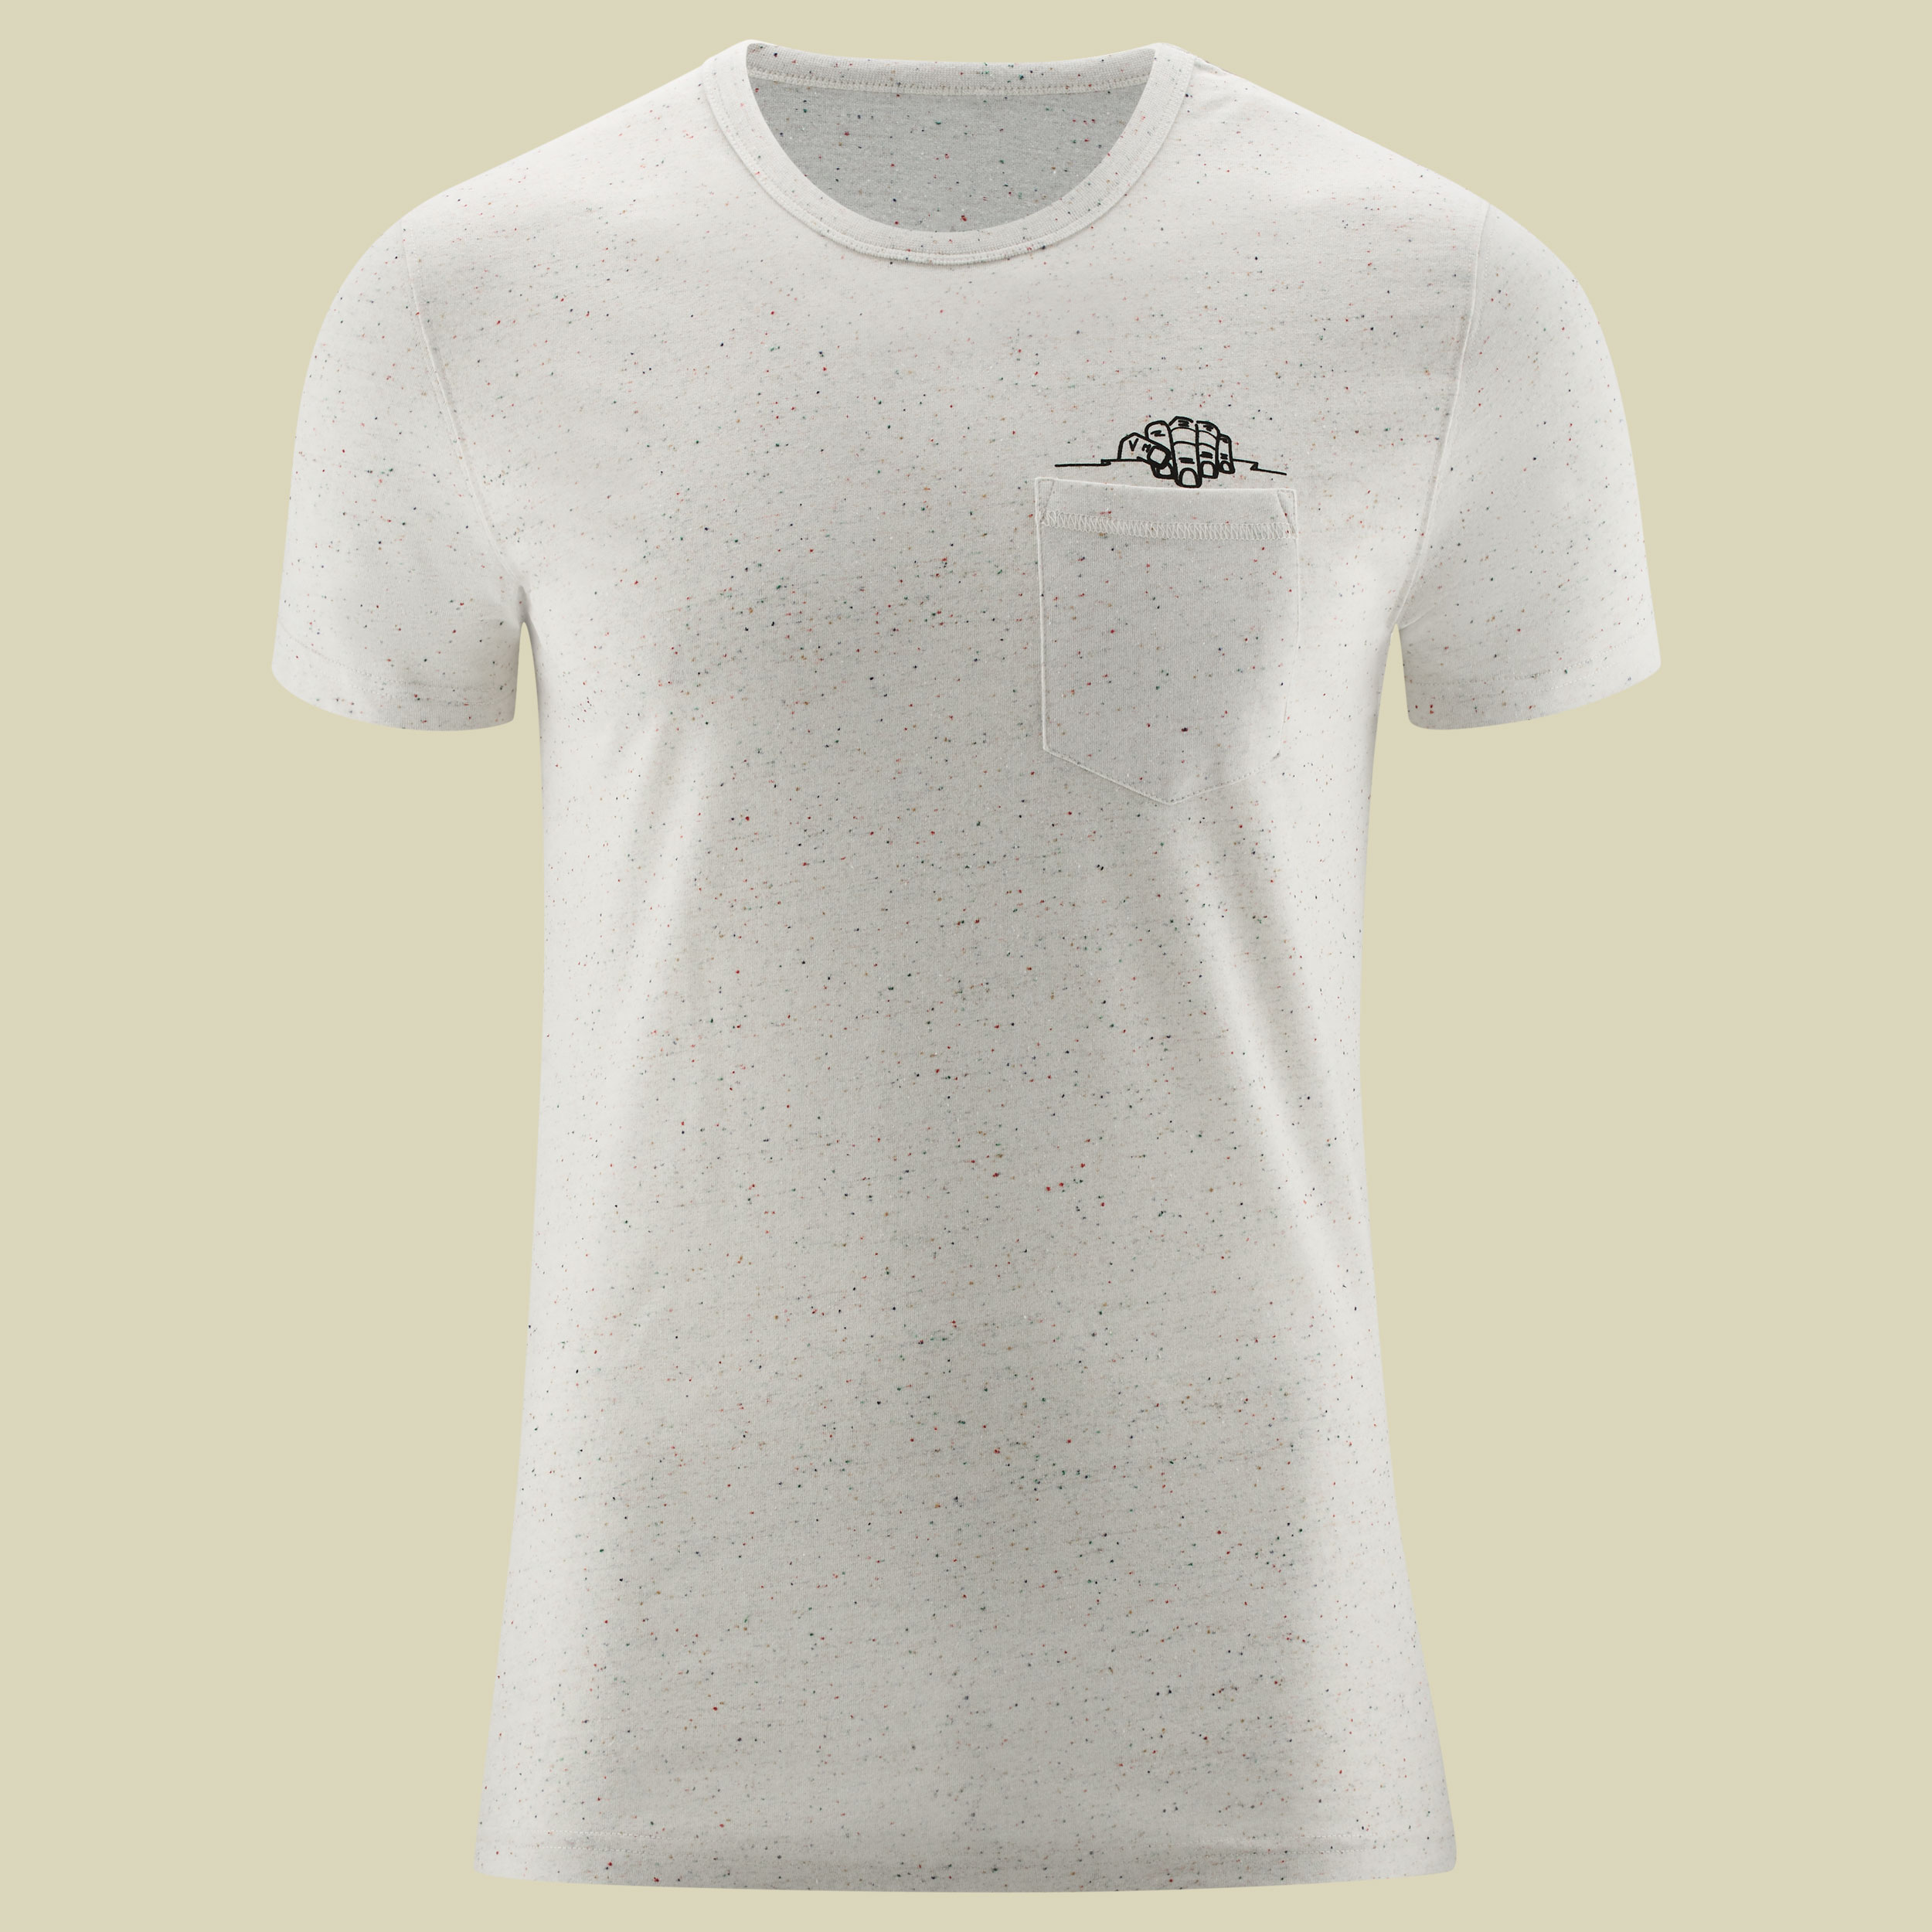 Heso T-Shirt III Men weiß L - white